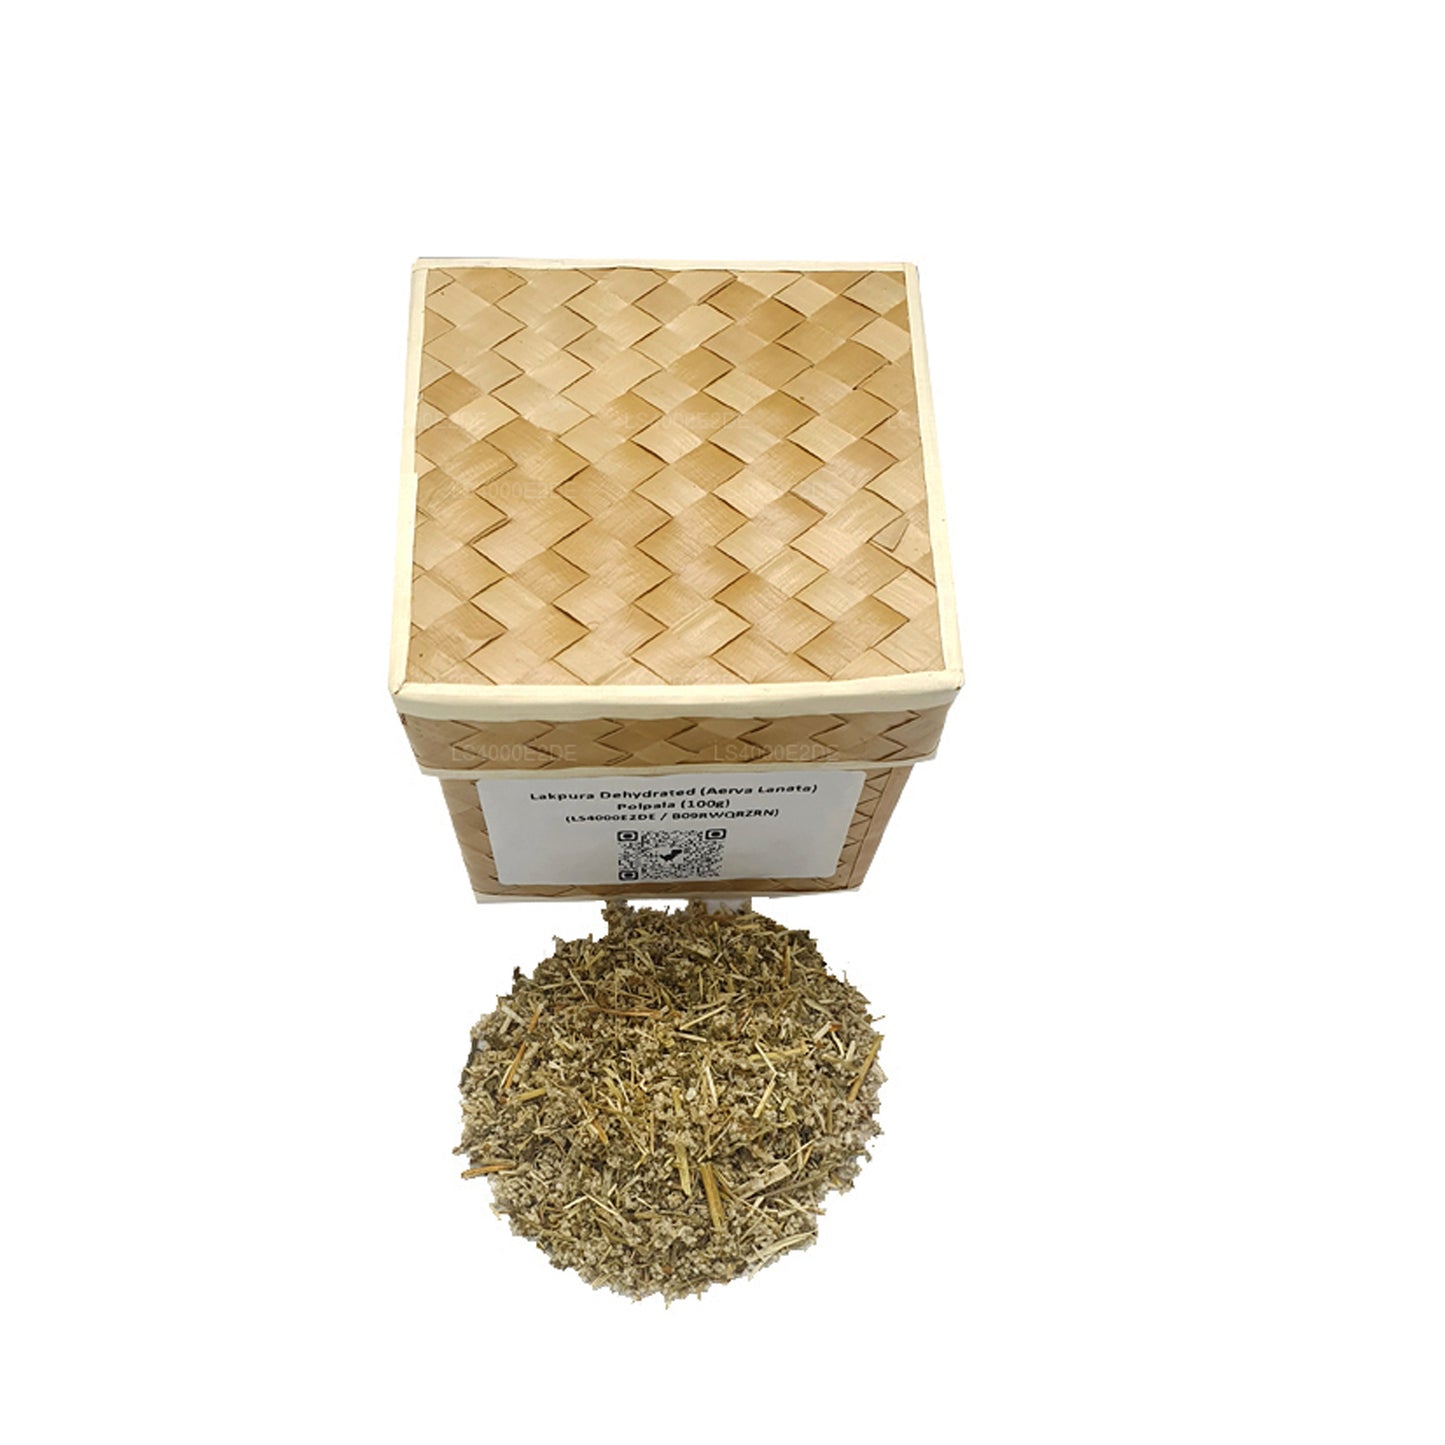 Lakpura Dehydreret (Aerva Lanata) Polpala (100g) kasse